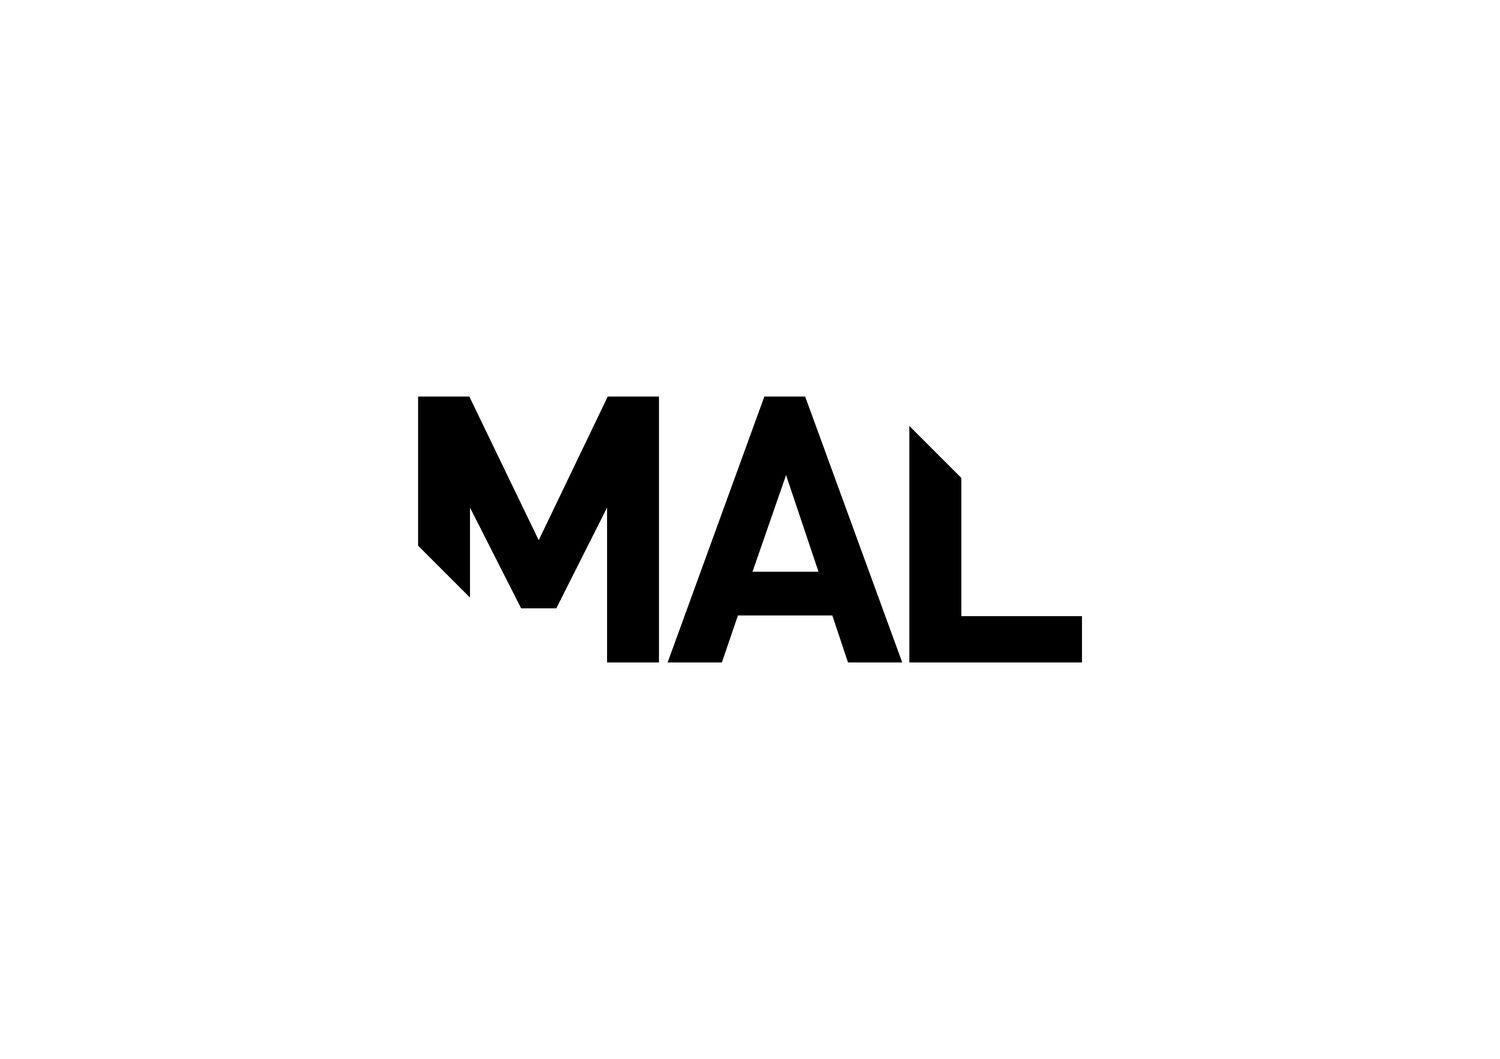 Mal Logo - MAL